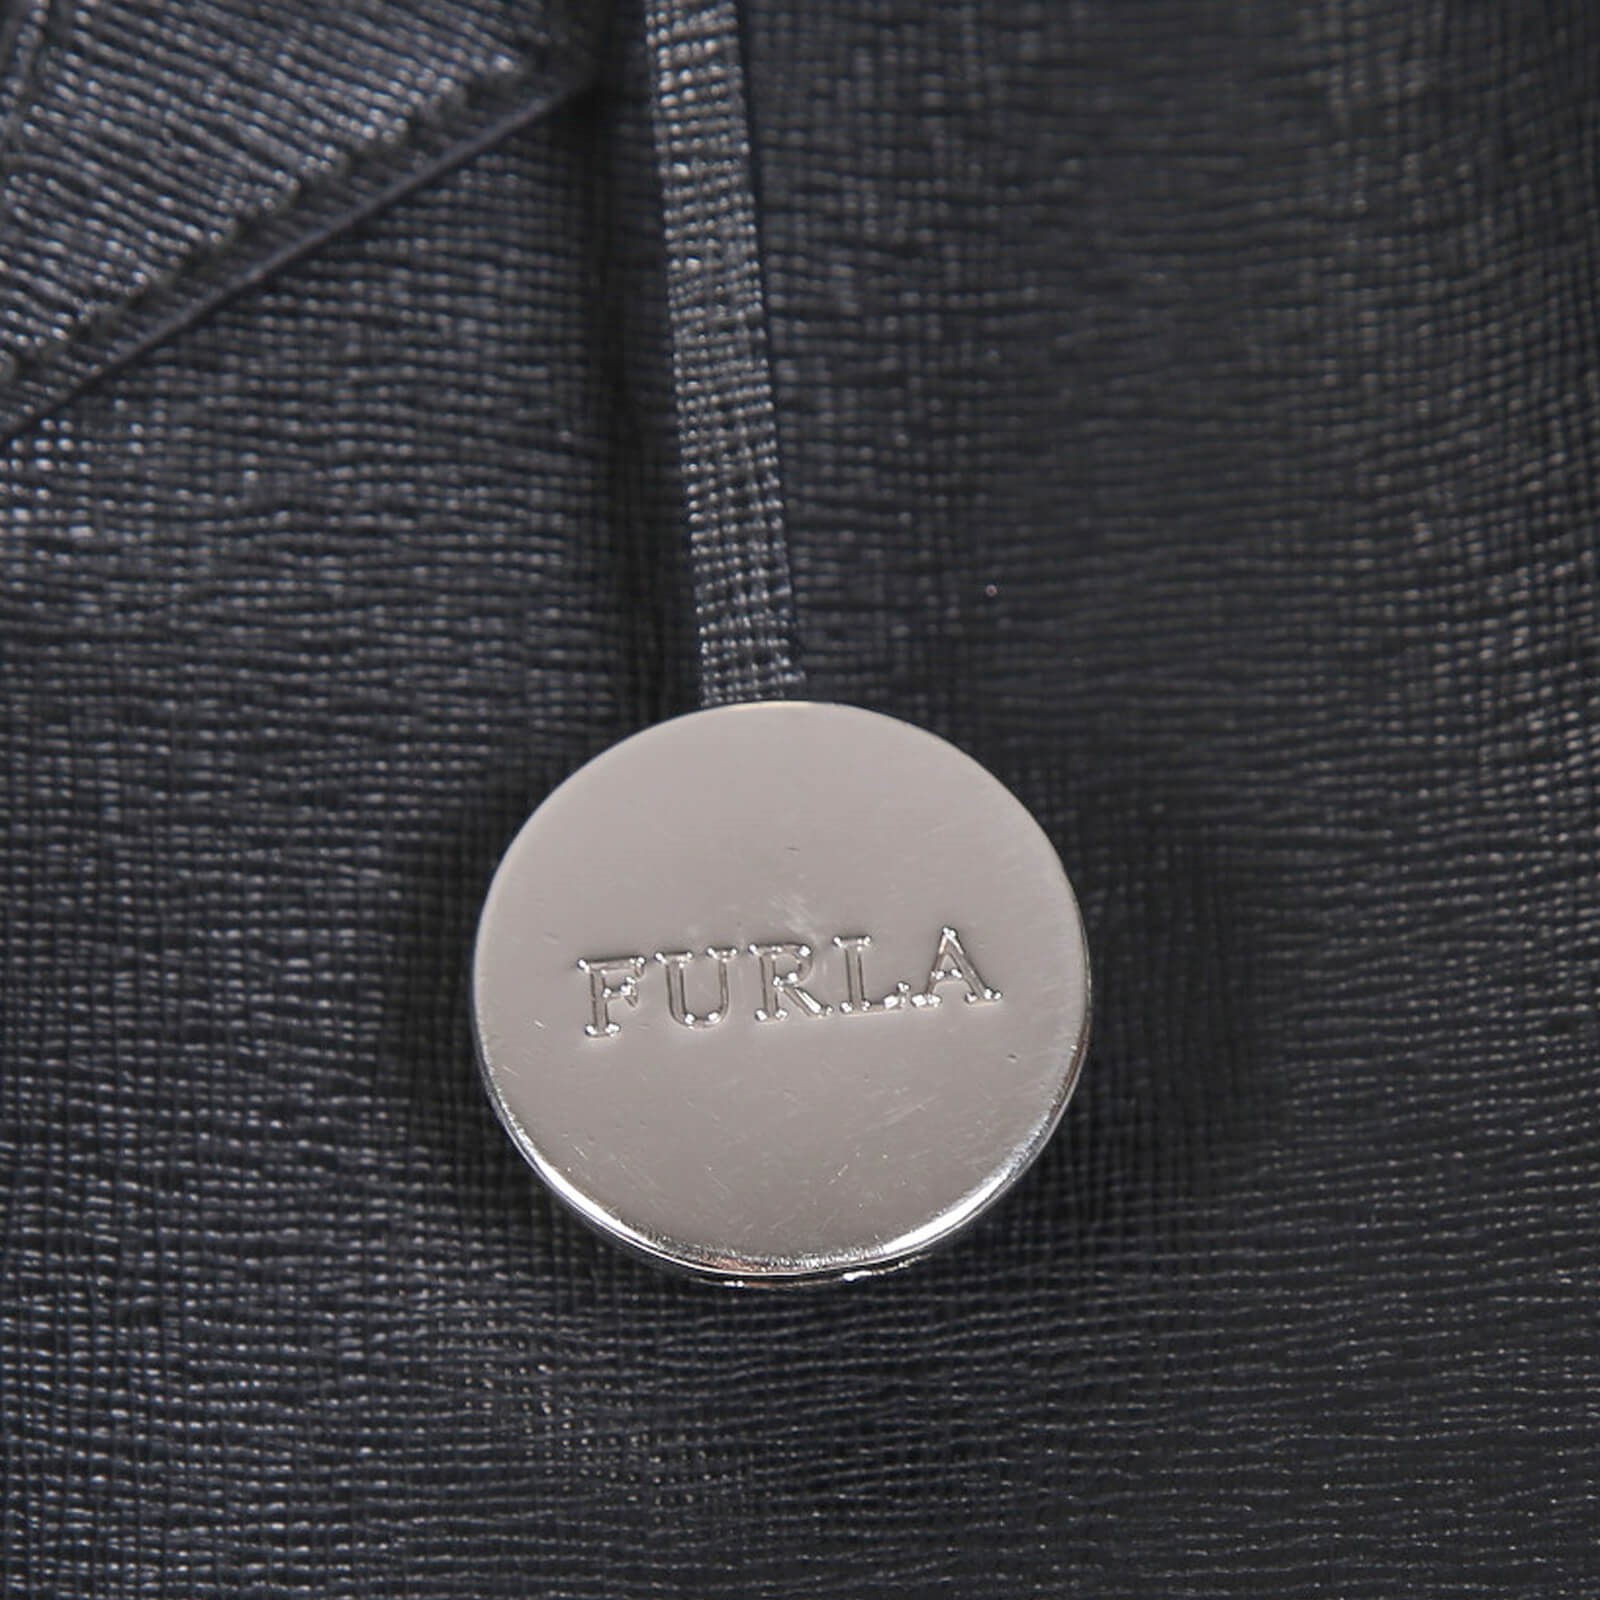 Furla - Saffiano Leather Tote Black | www.luxurybags.cz